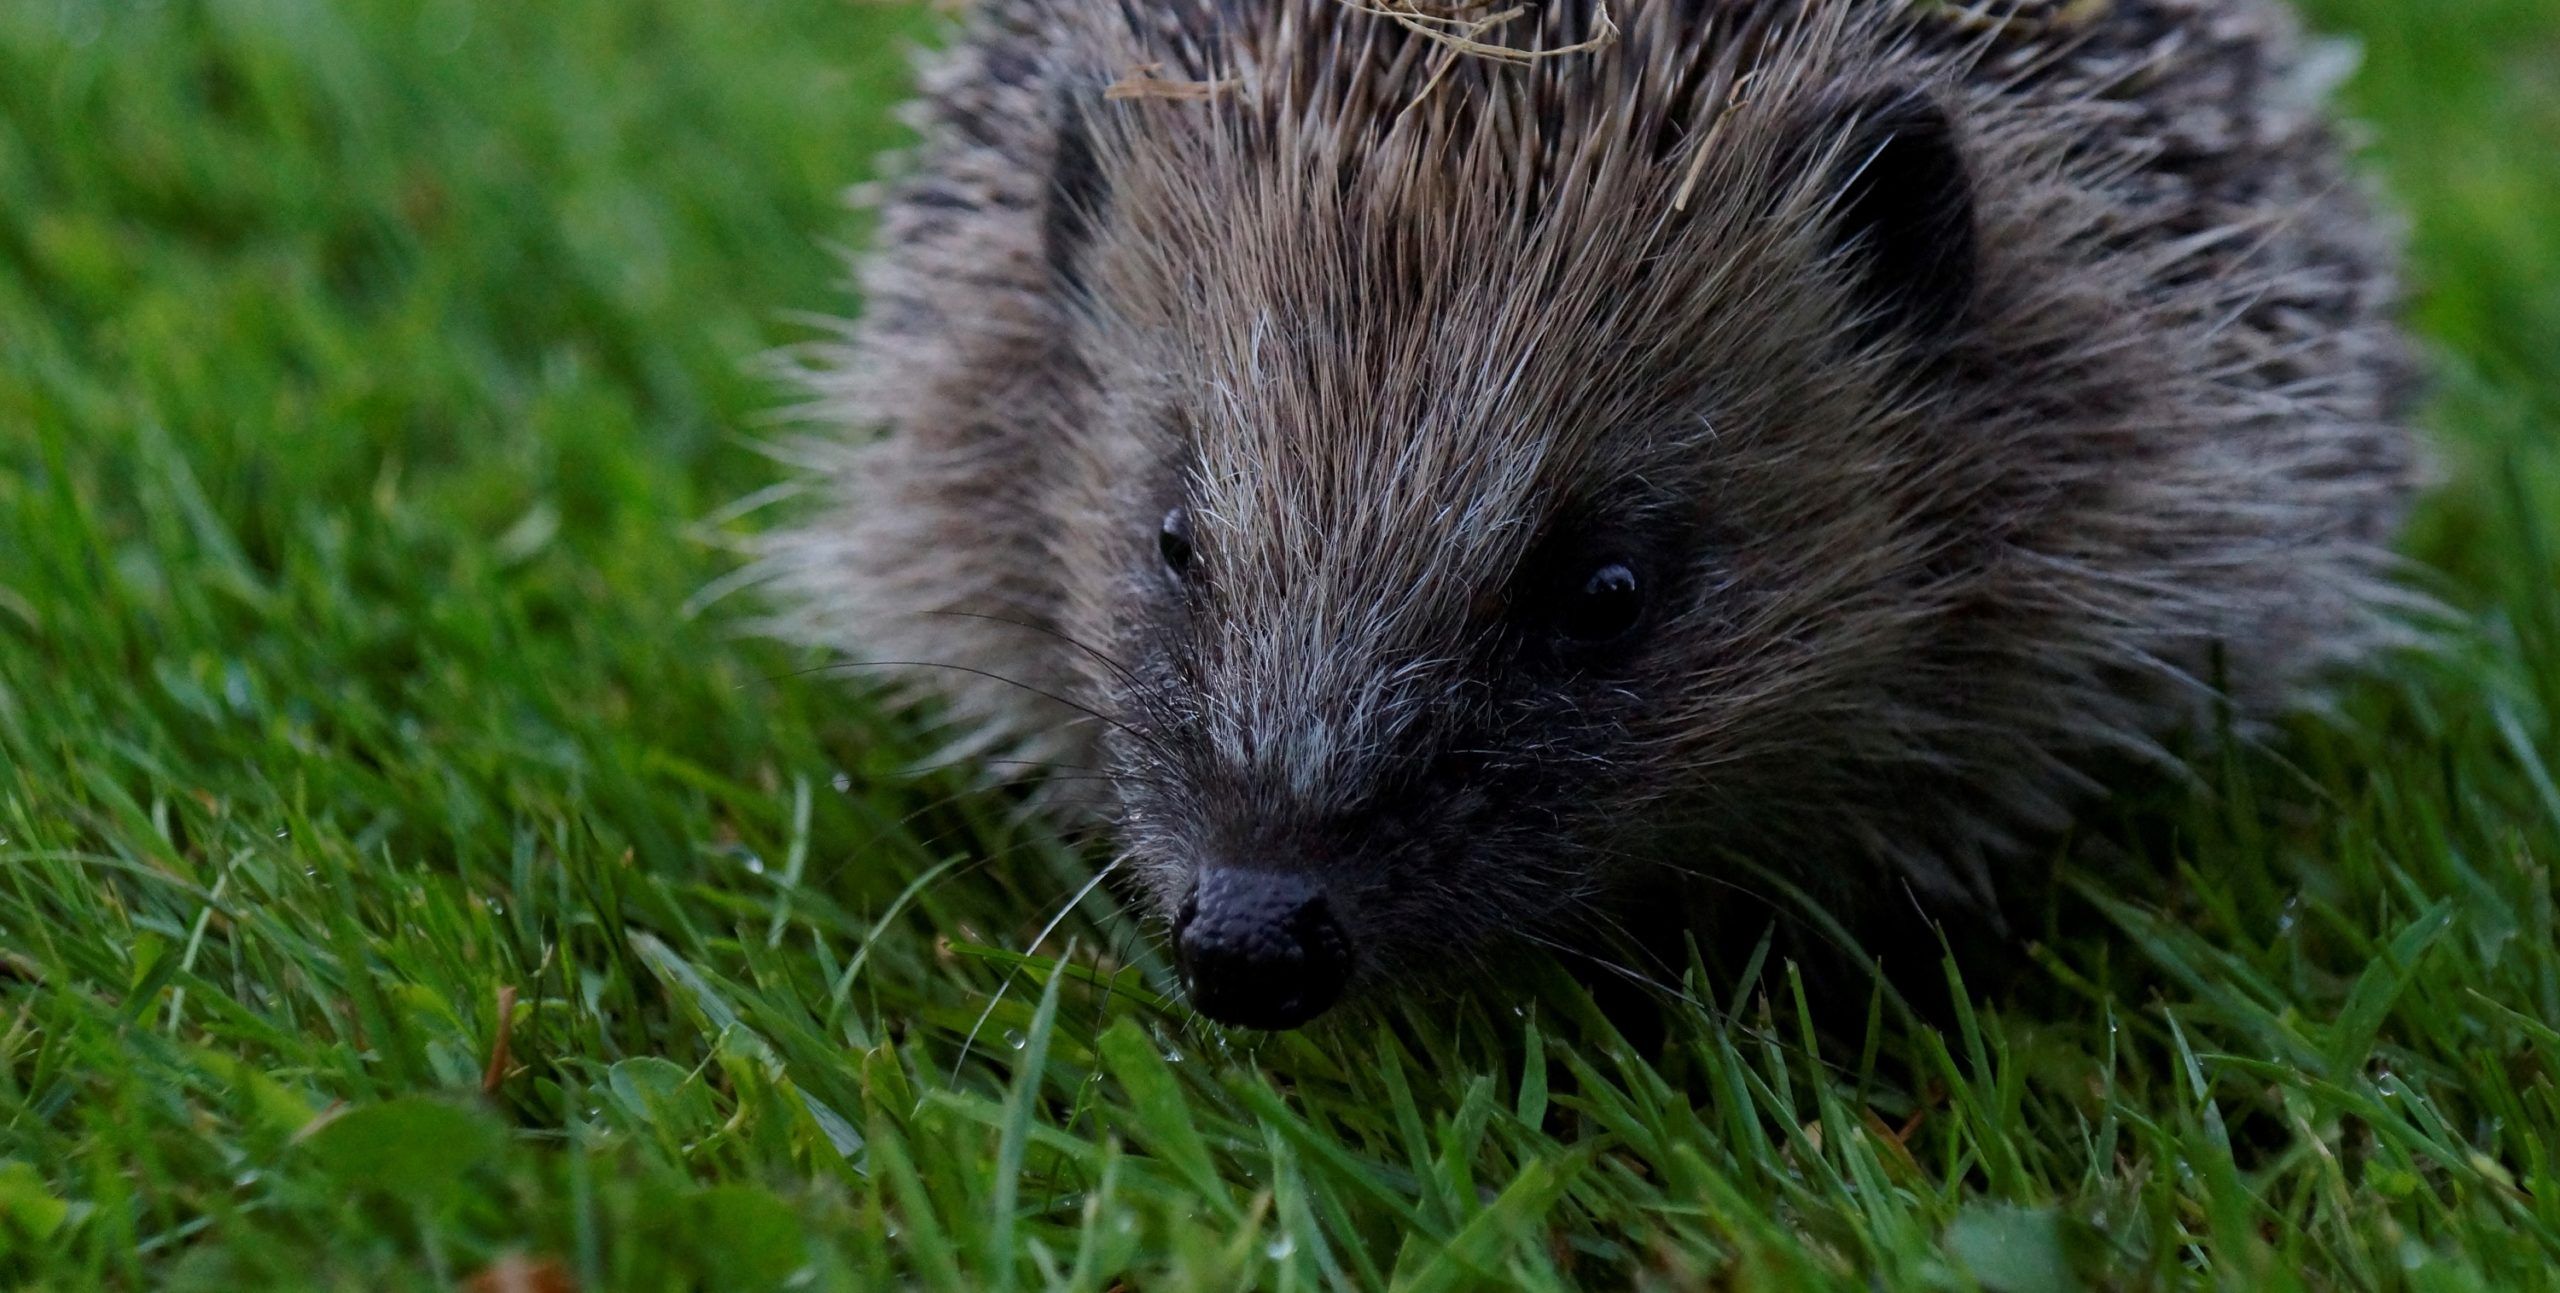 David Cooper Native British hedgehog on a lawn